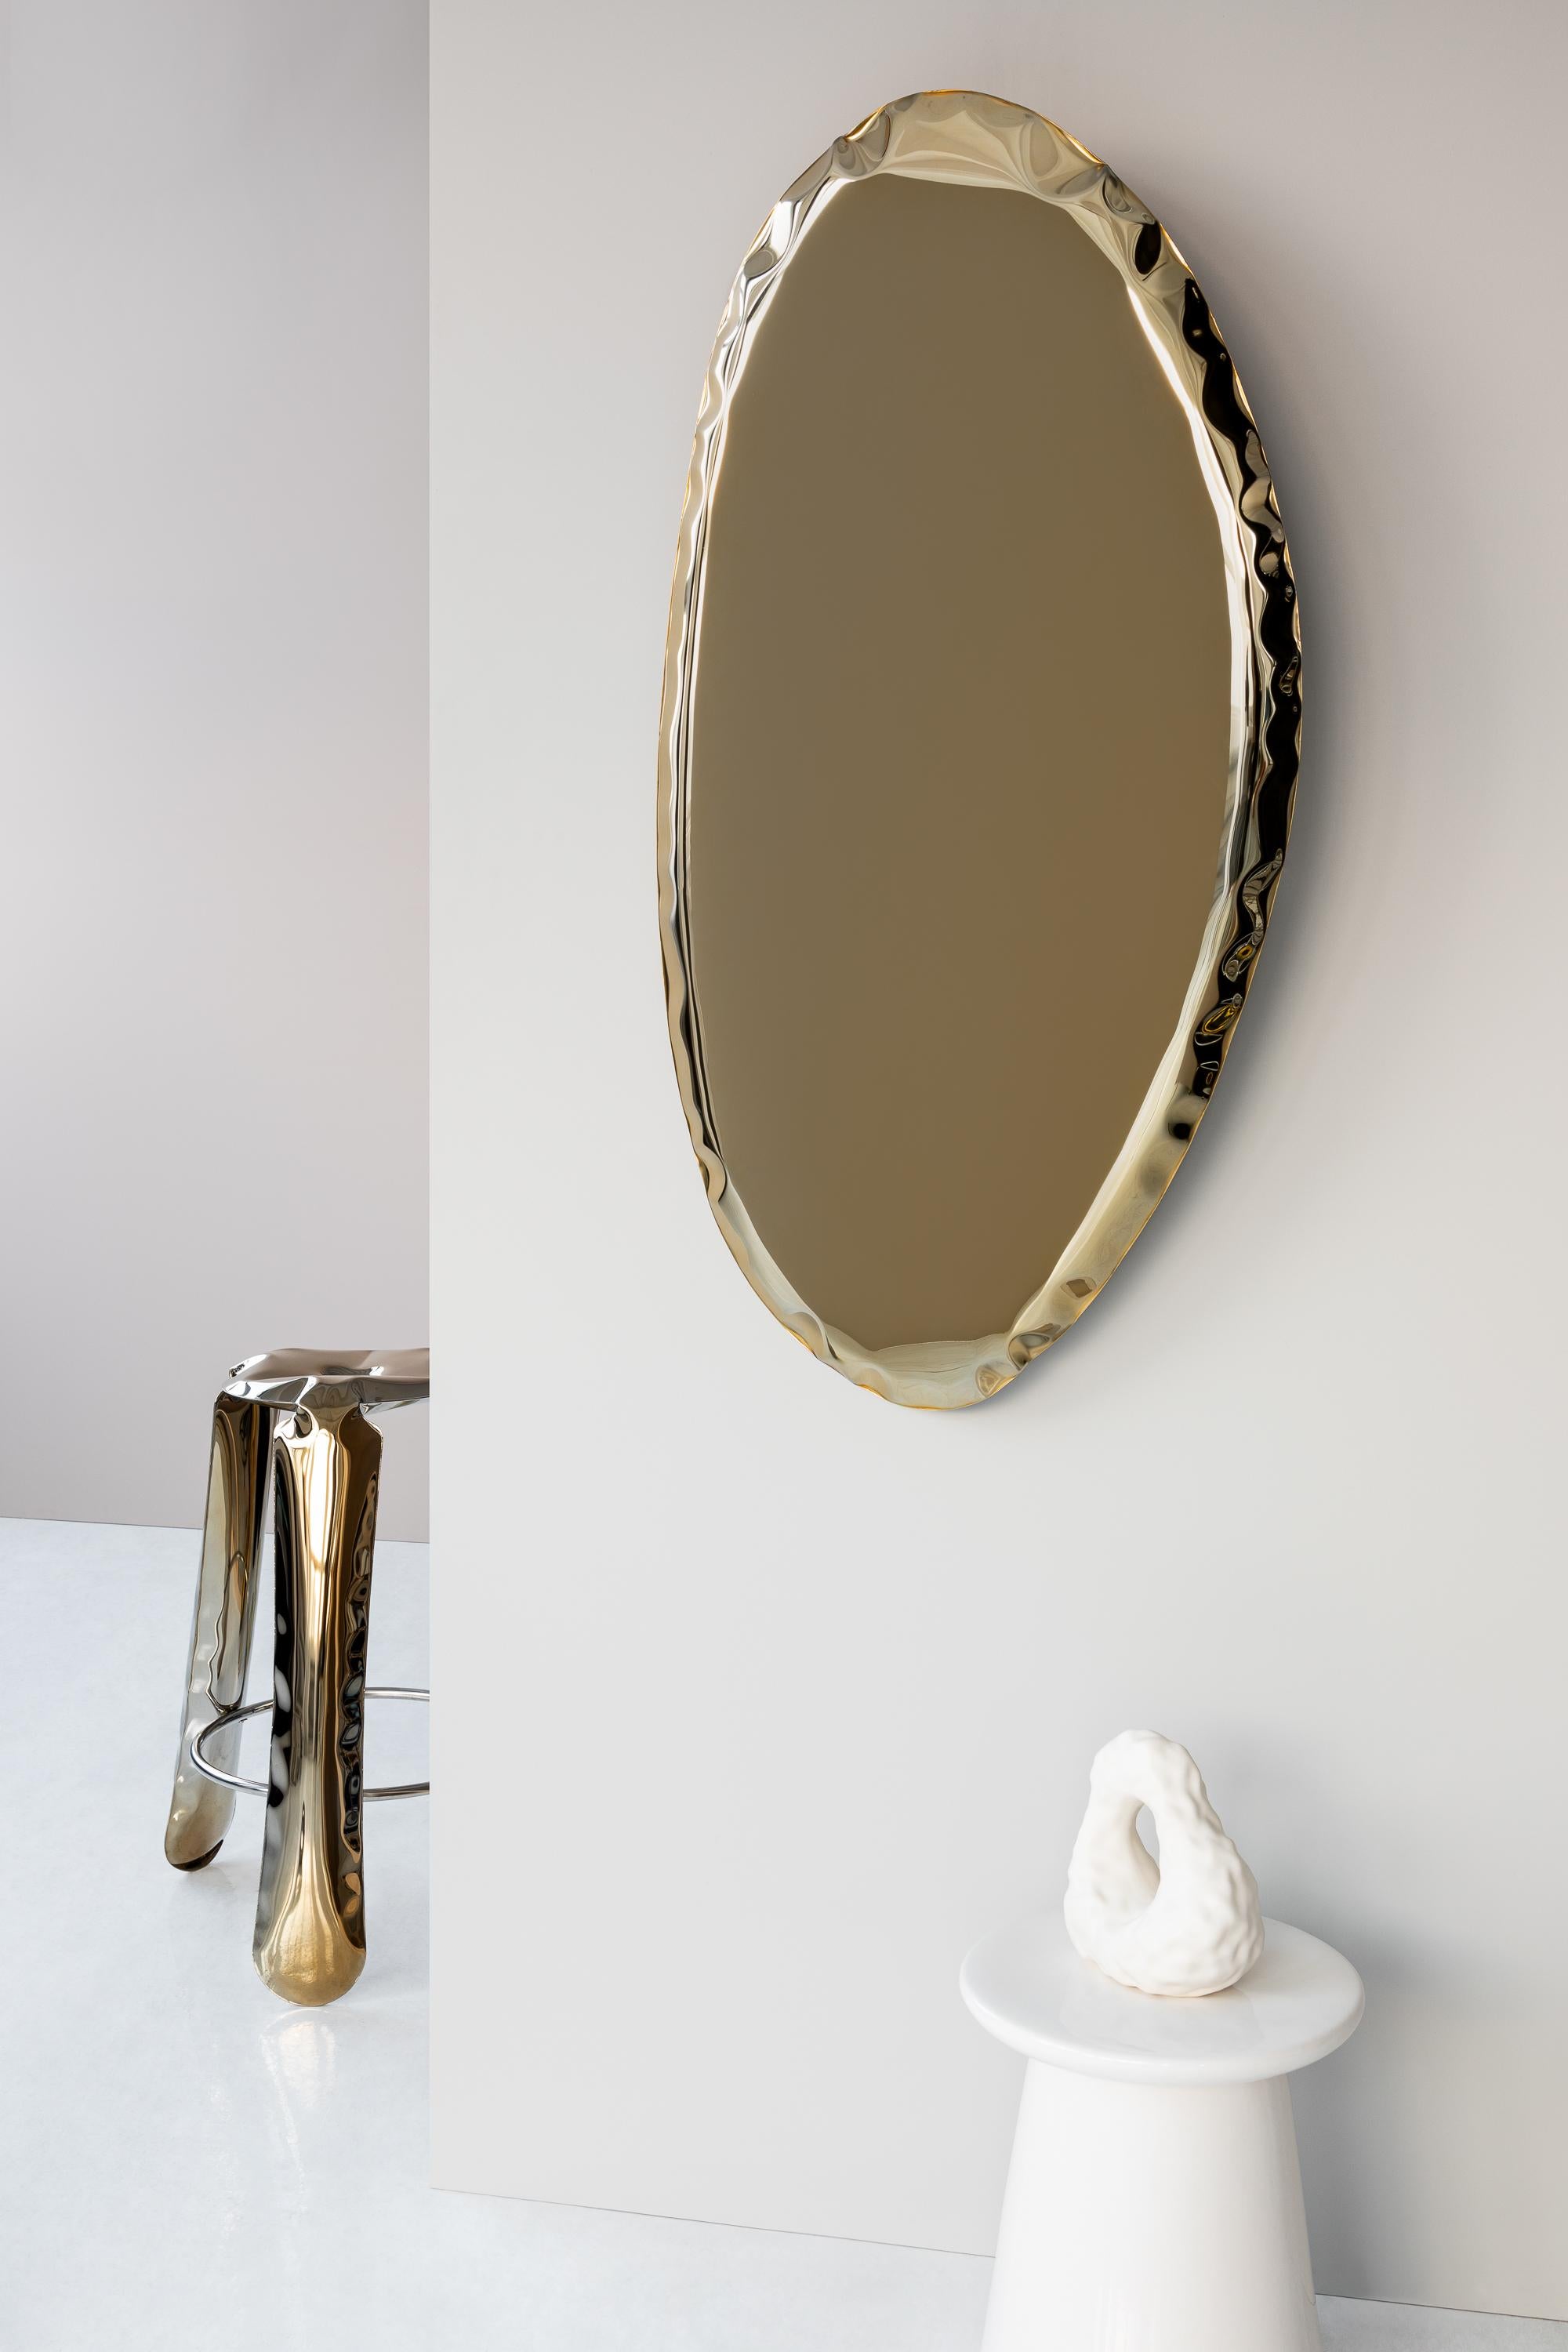 Organic Modern Light Gold Tafla O6 Wall Mirror by Zieta For Sale